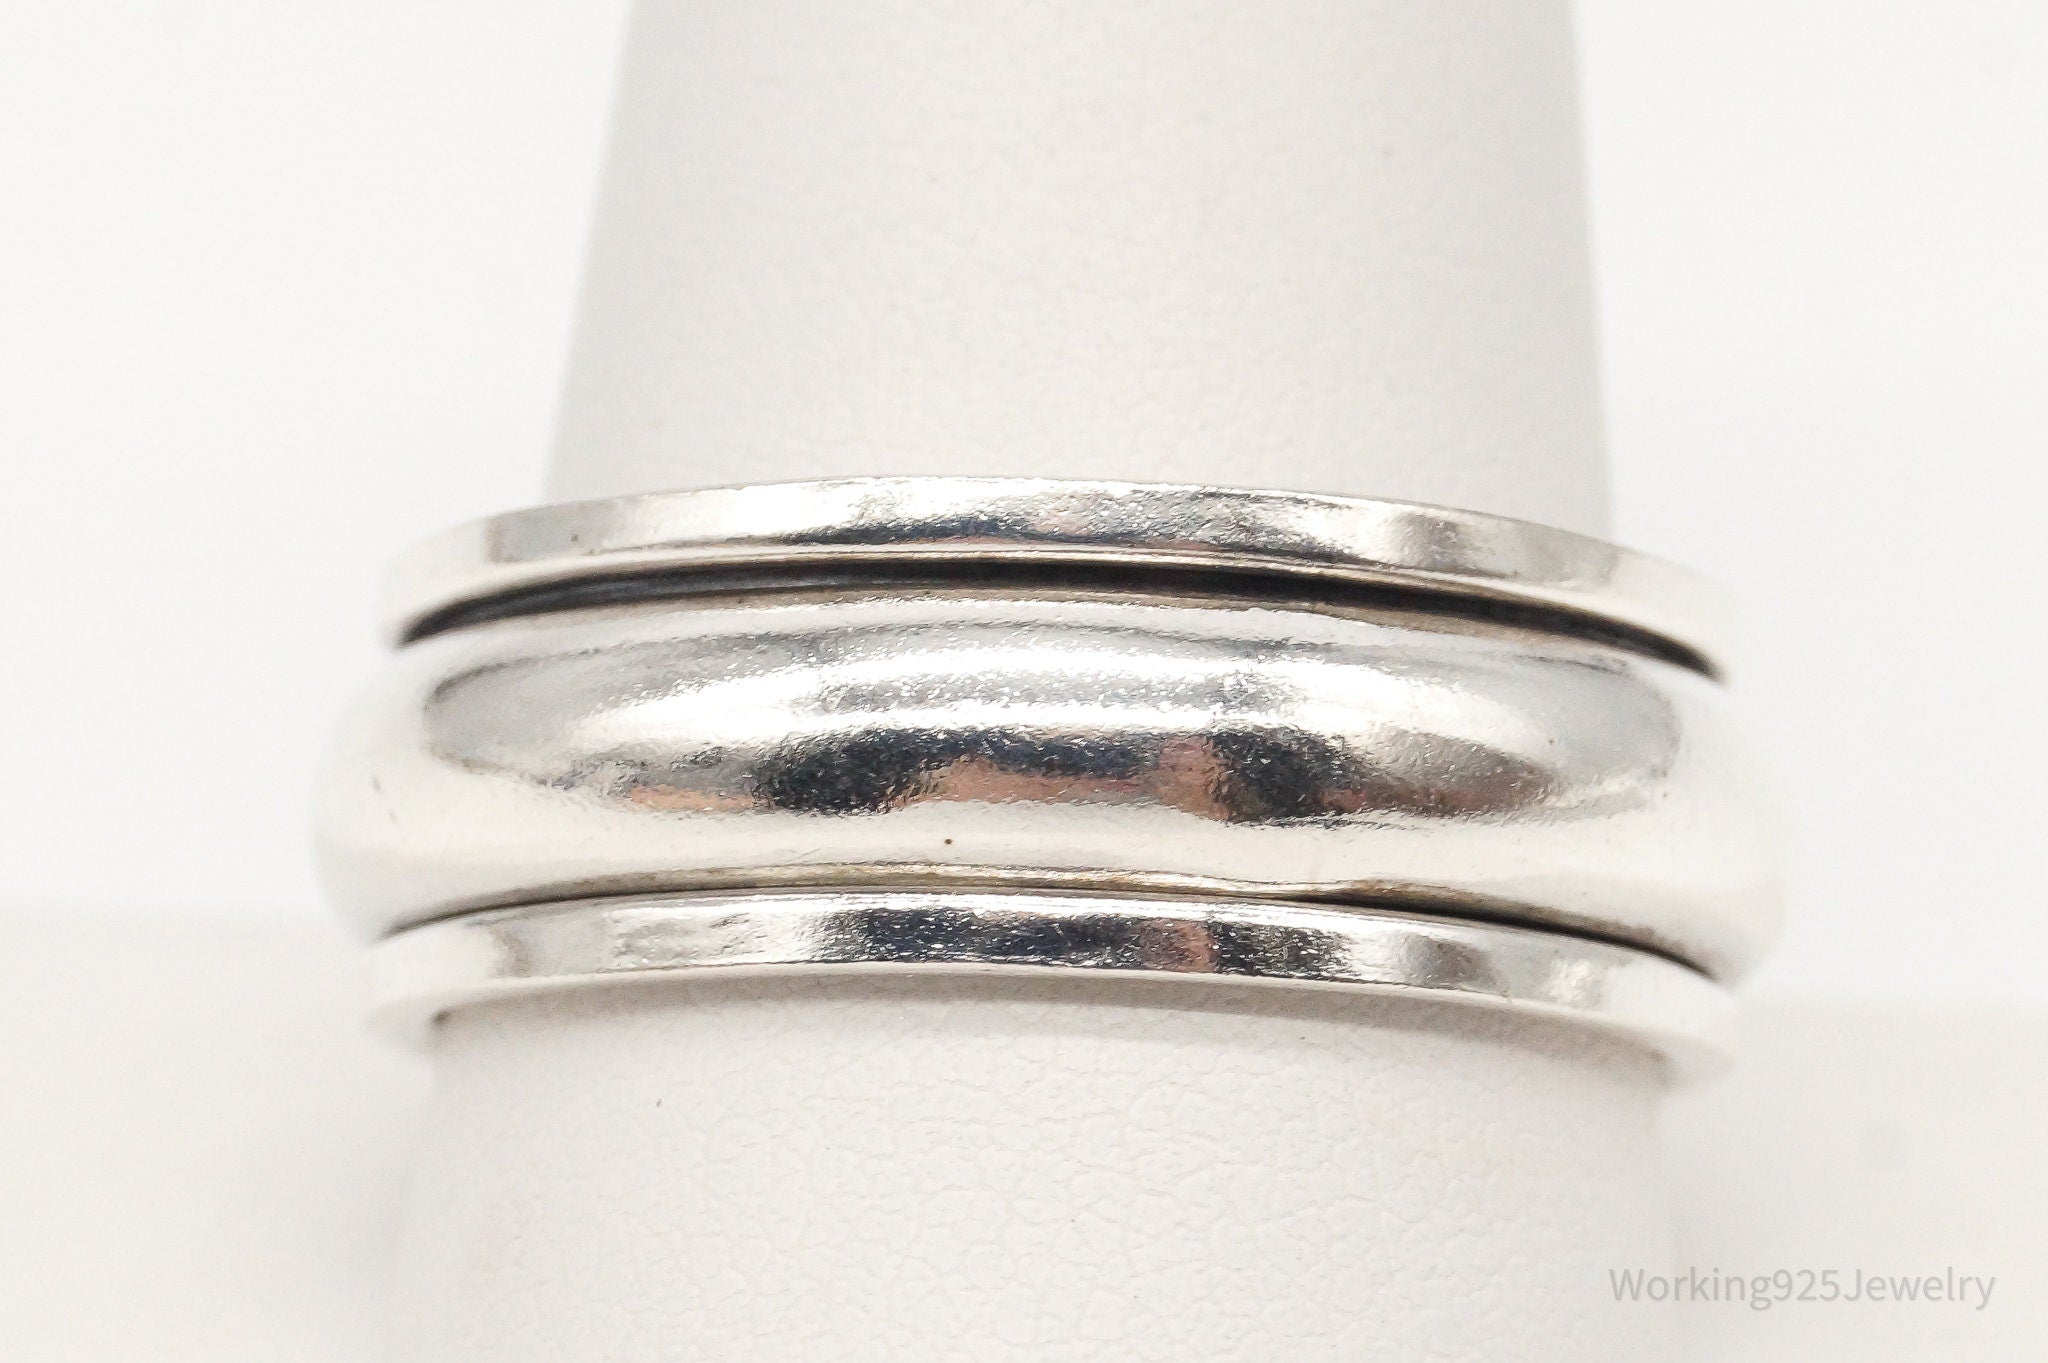 Vintage Sterling Silver Spinner Ring - Size 11.75